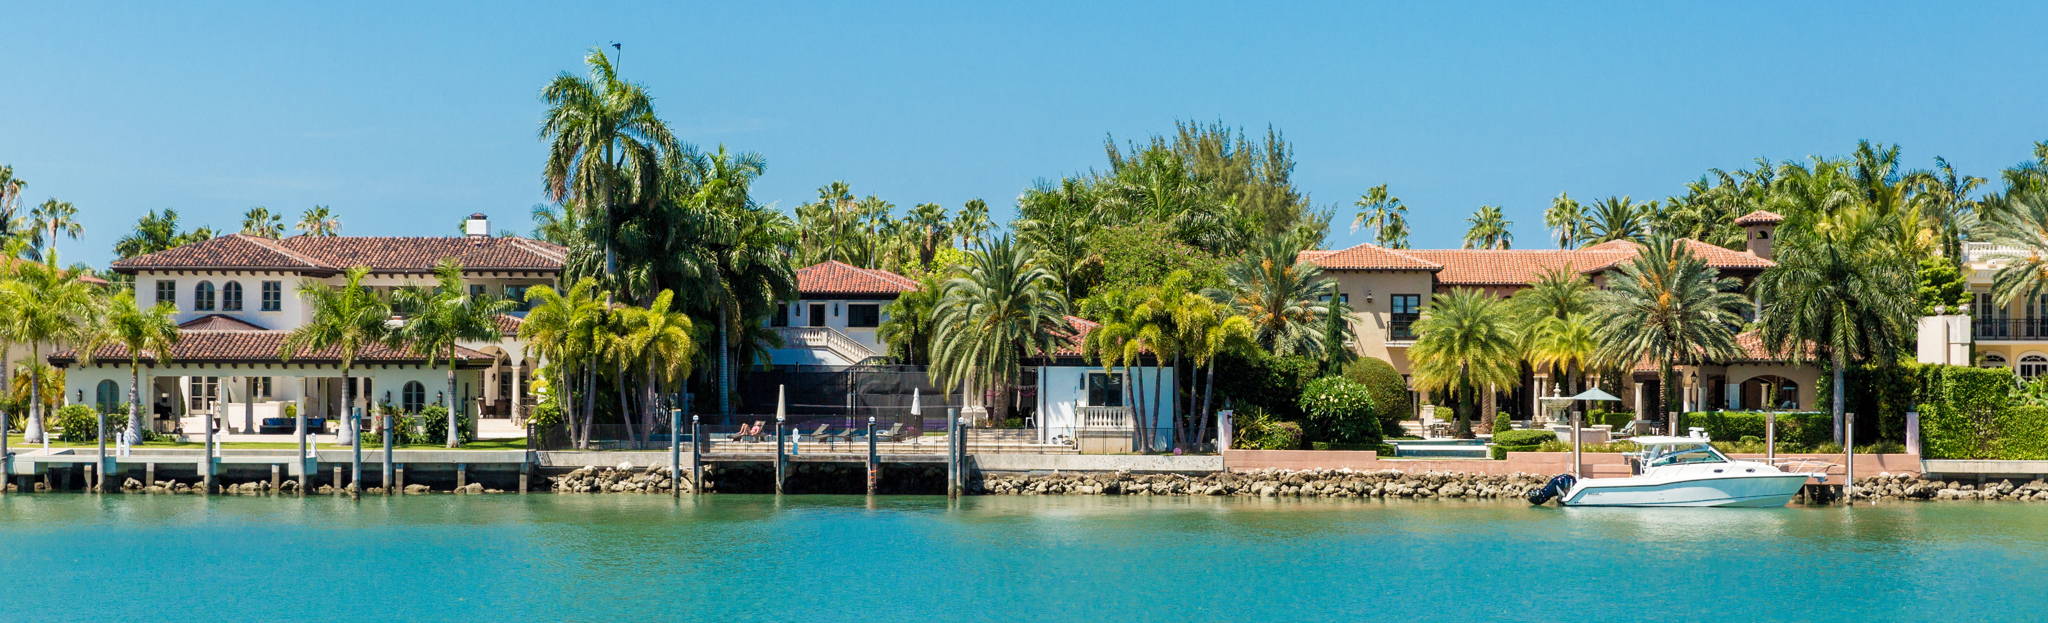 Punta Gorda Isles Florida Homes for Sale